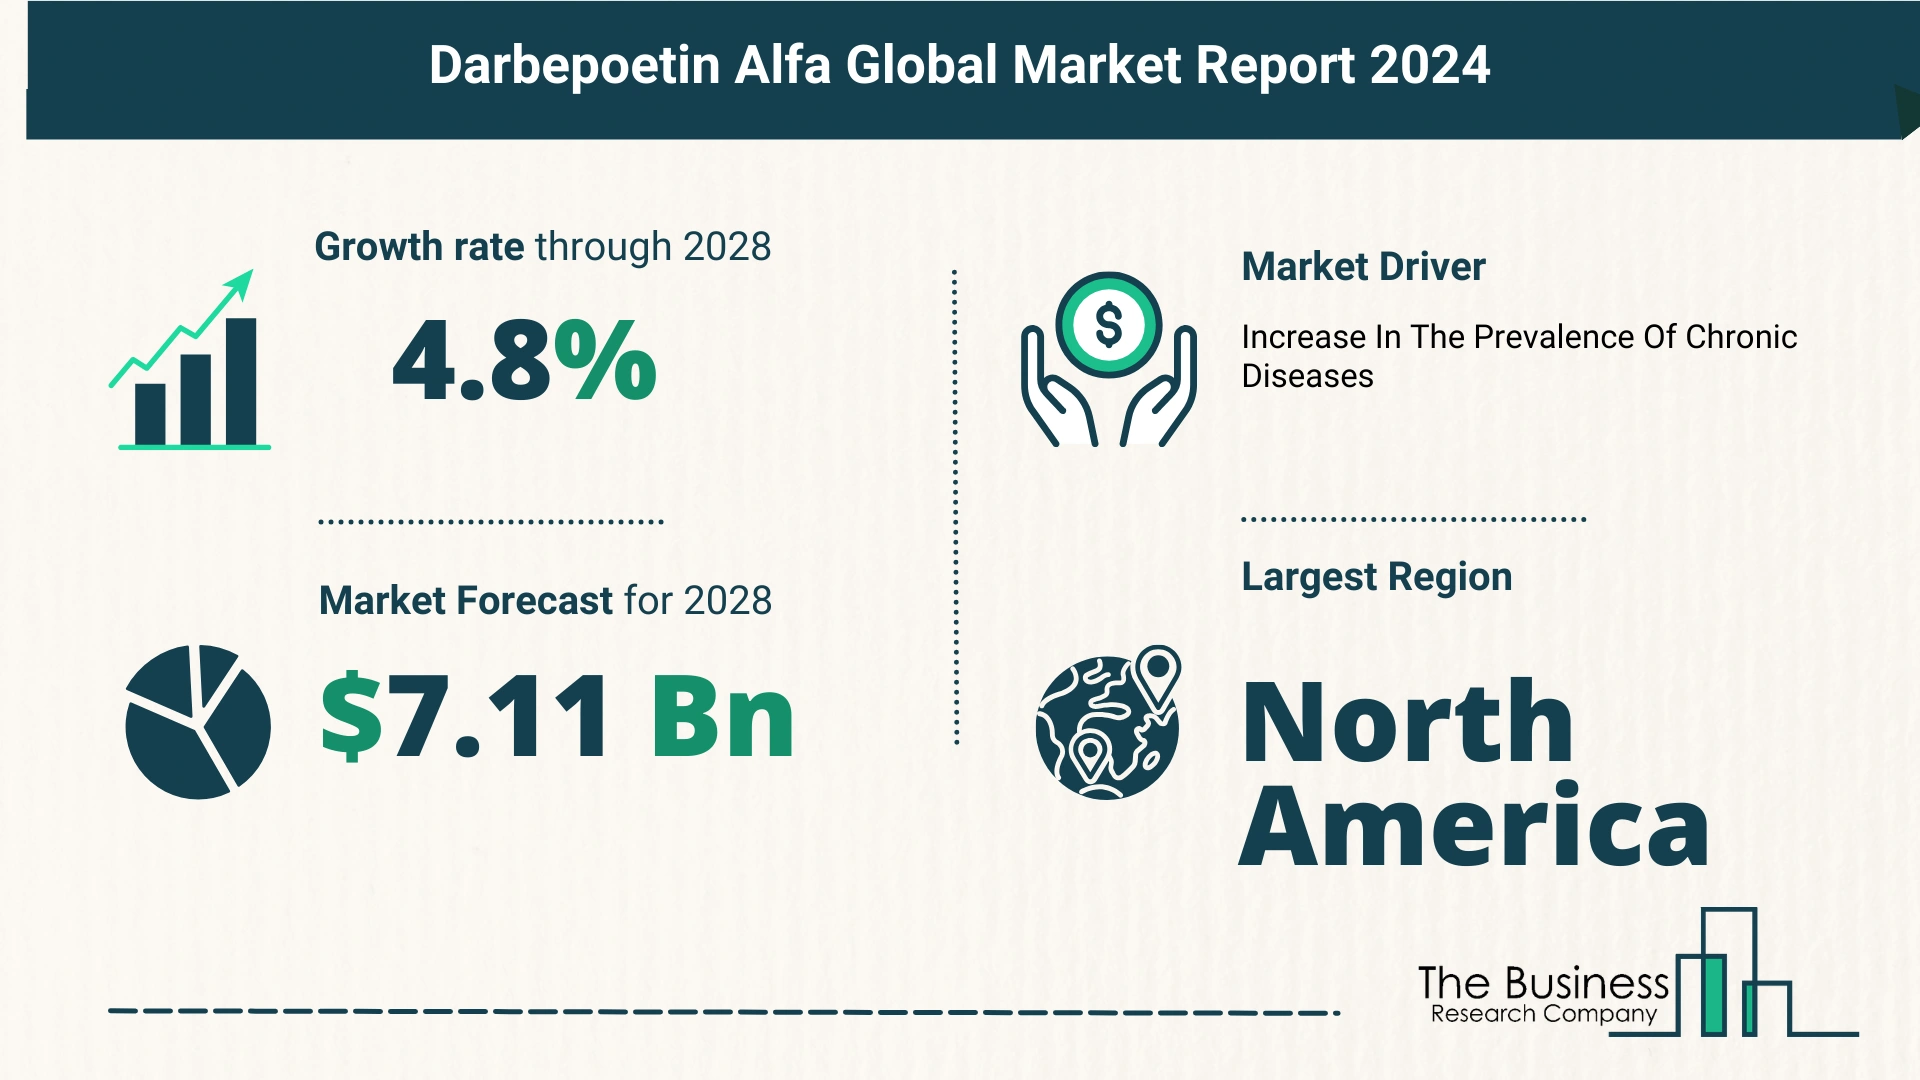 Global Darbepoetin Alfa (Aranesp) Market Size